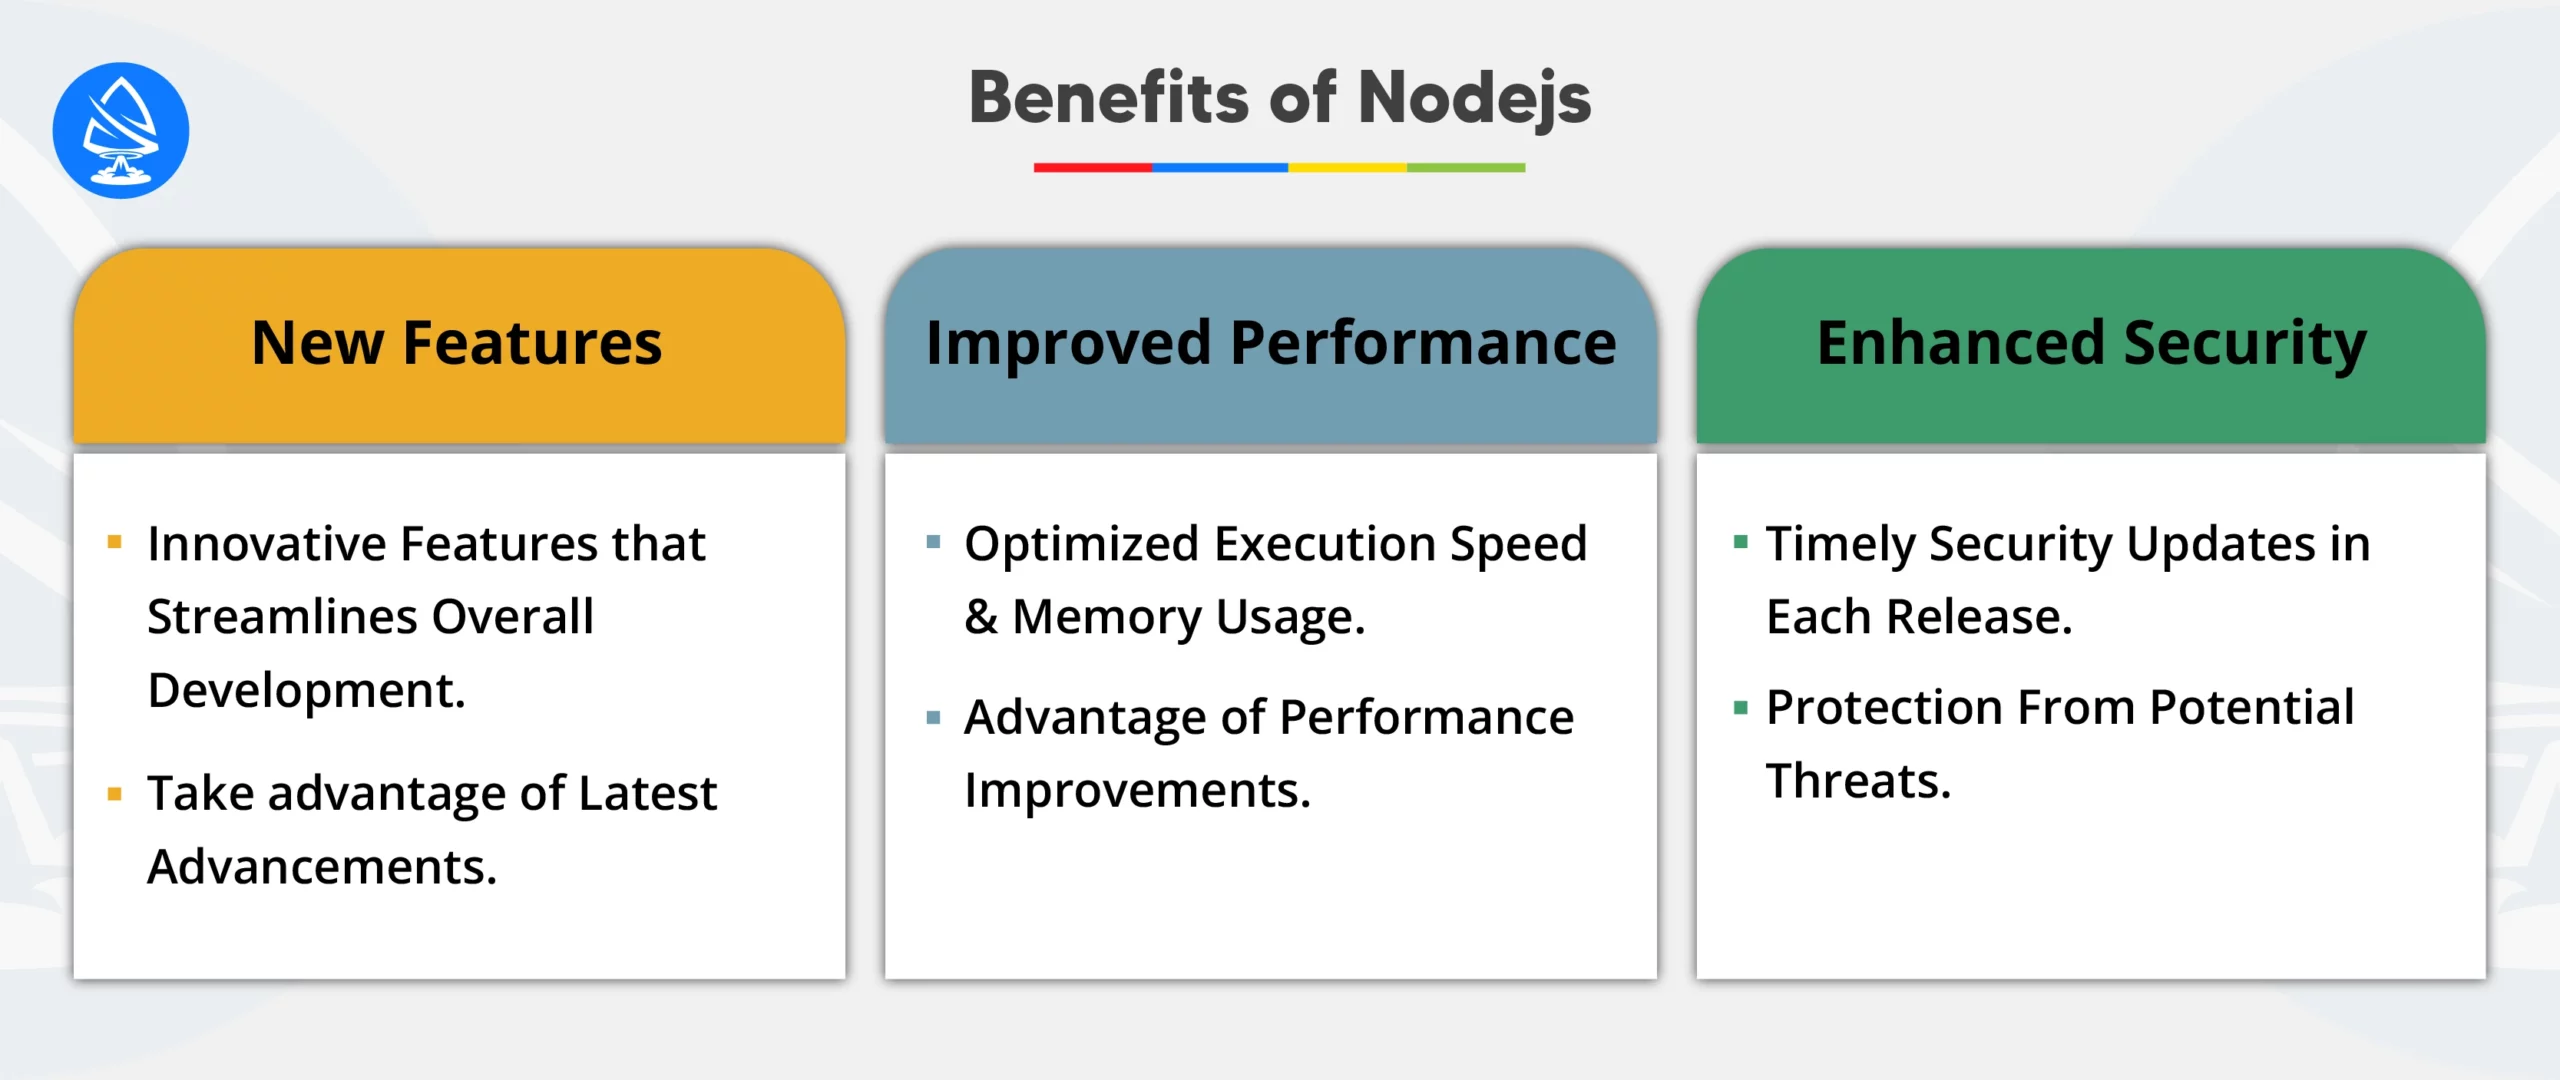 Benefits of nodejs